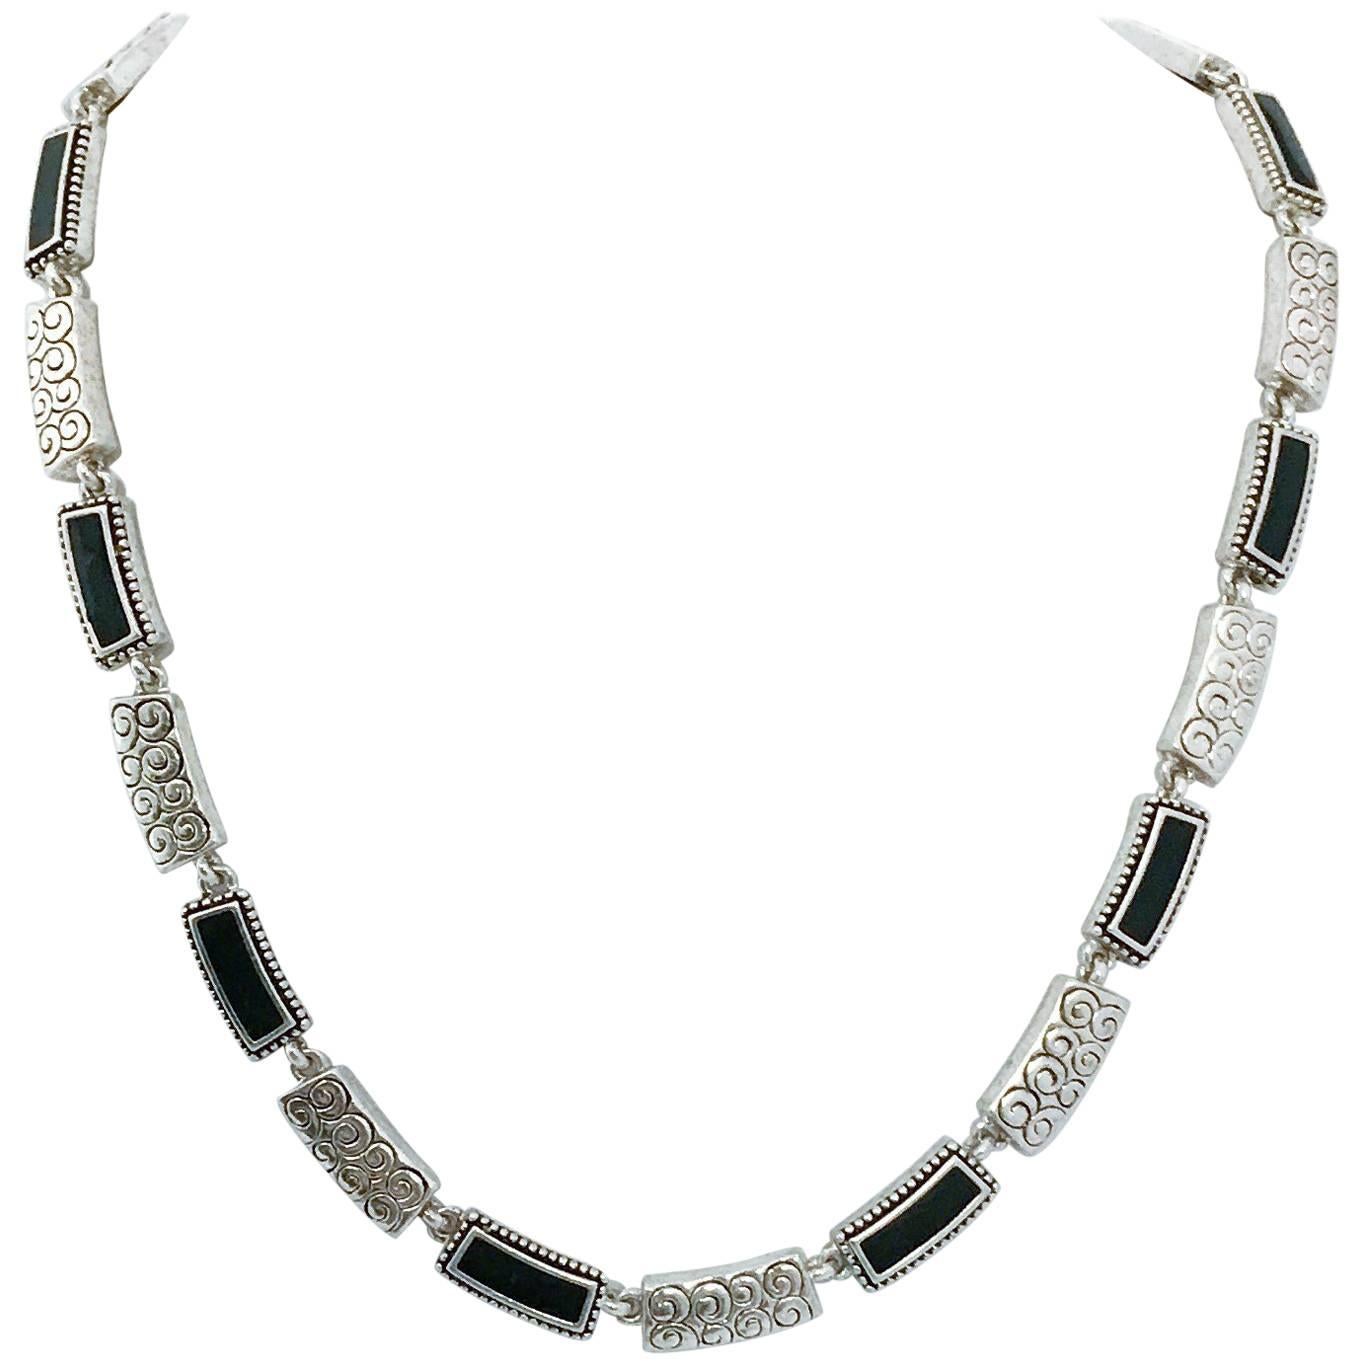 1980s Napier Silver-tone Enamel Necklace